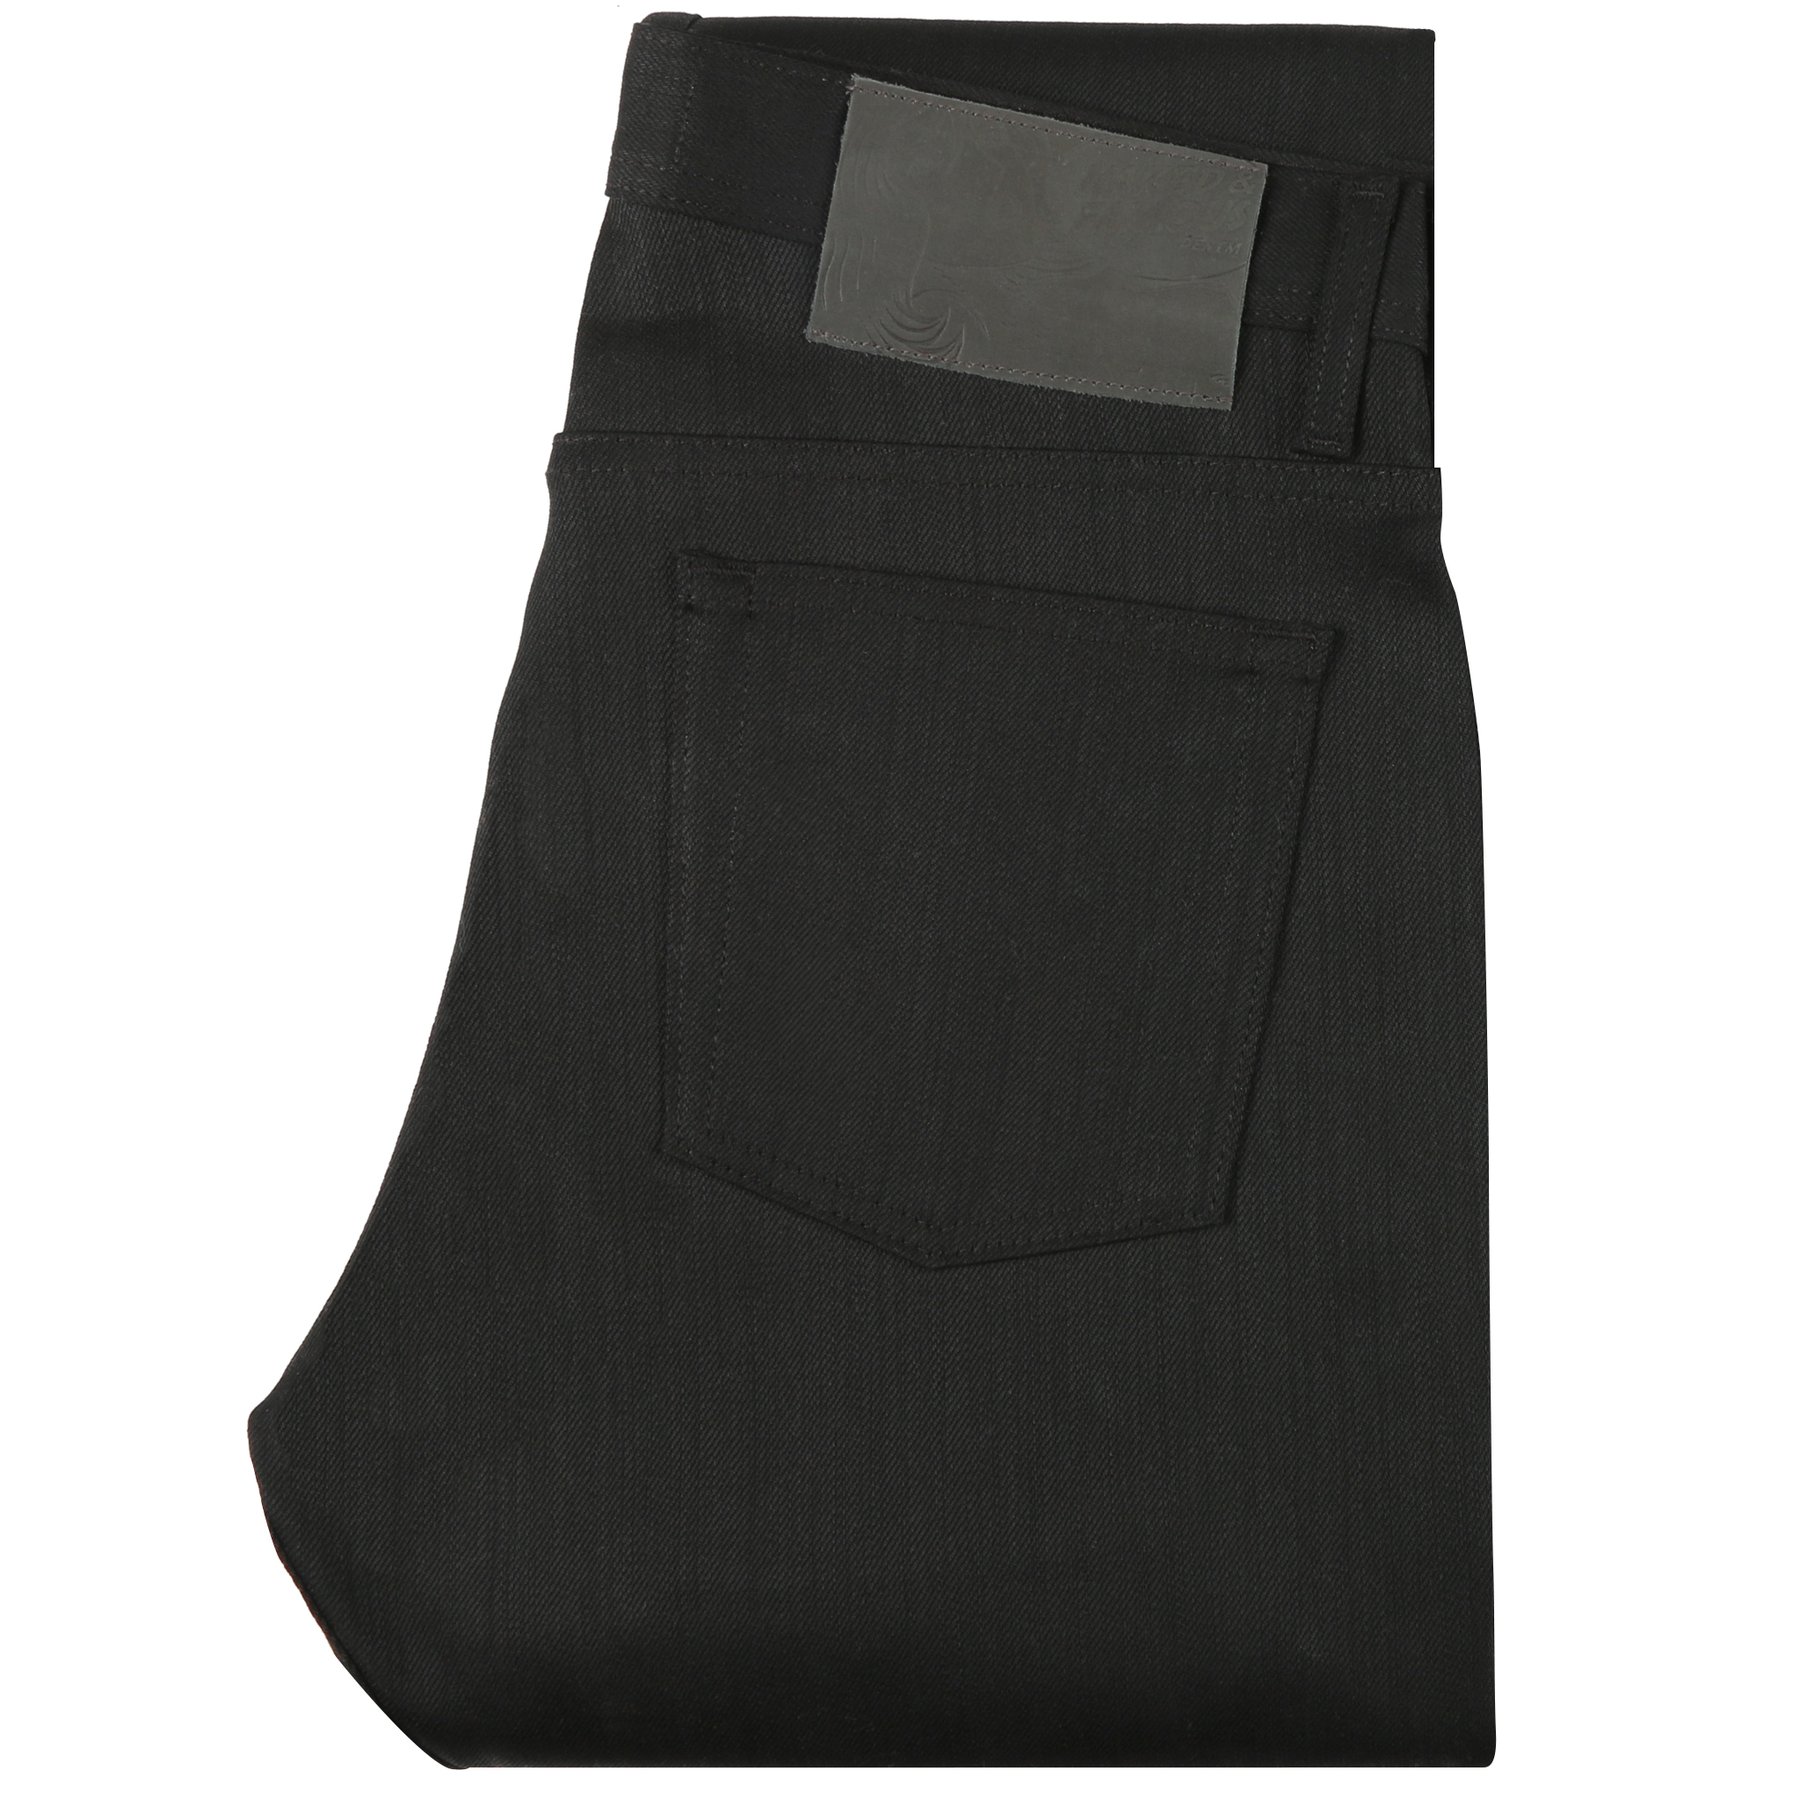  Black Power-Stretch Jeans Folded 